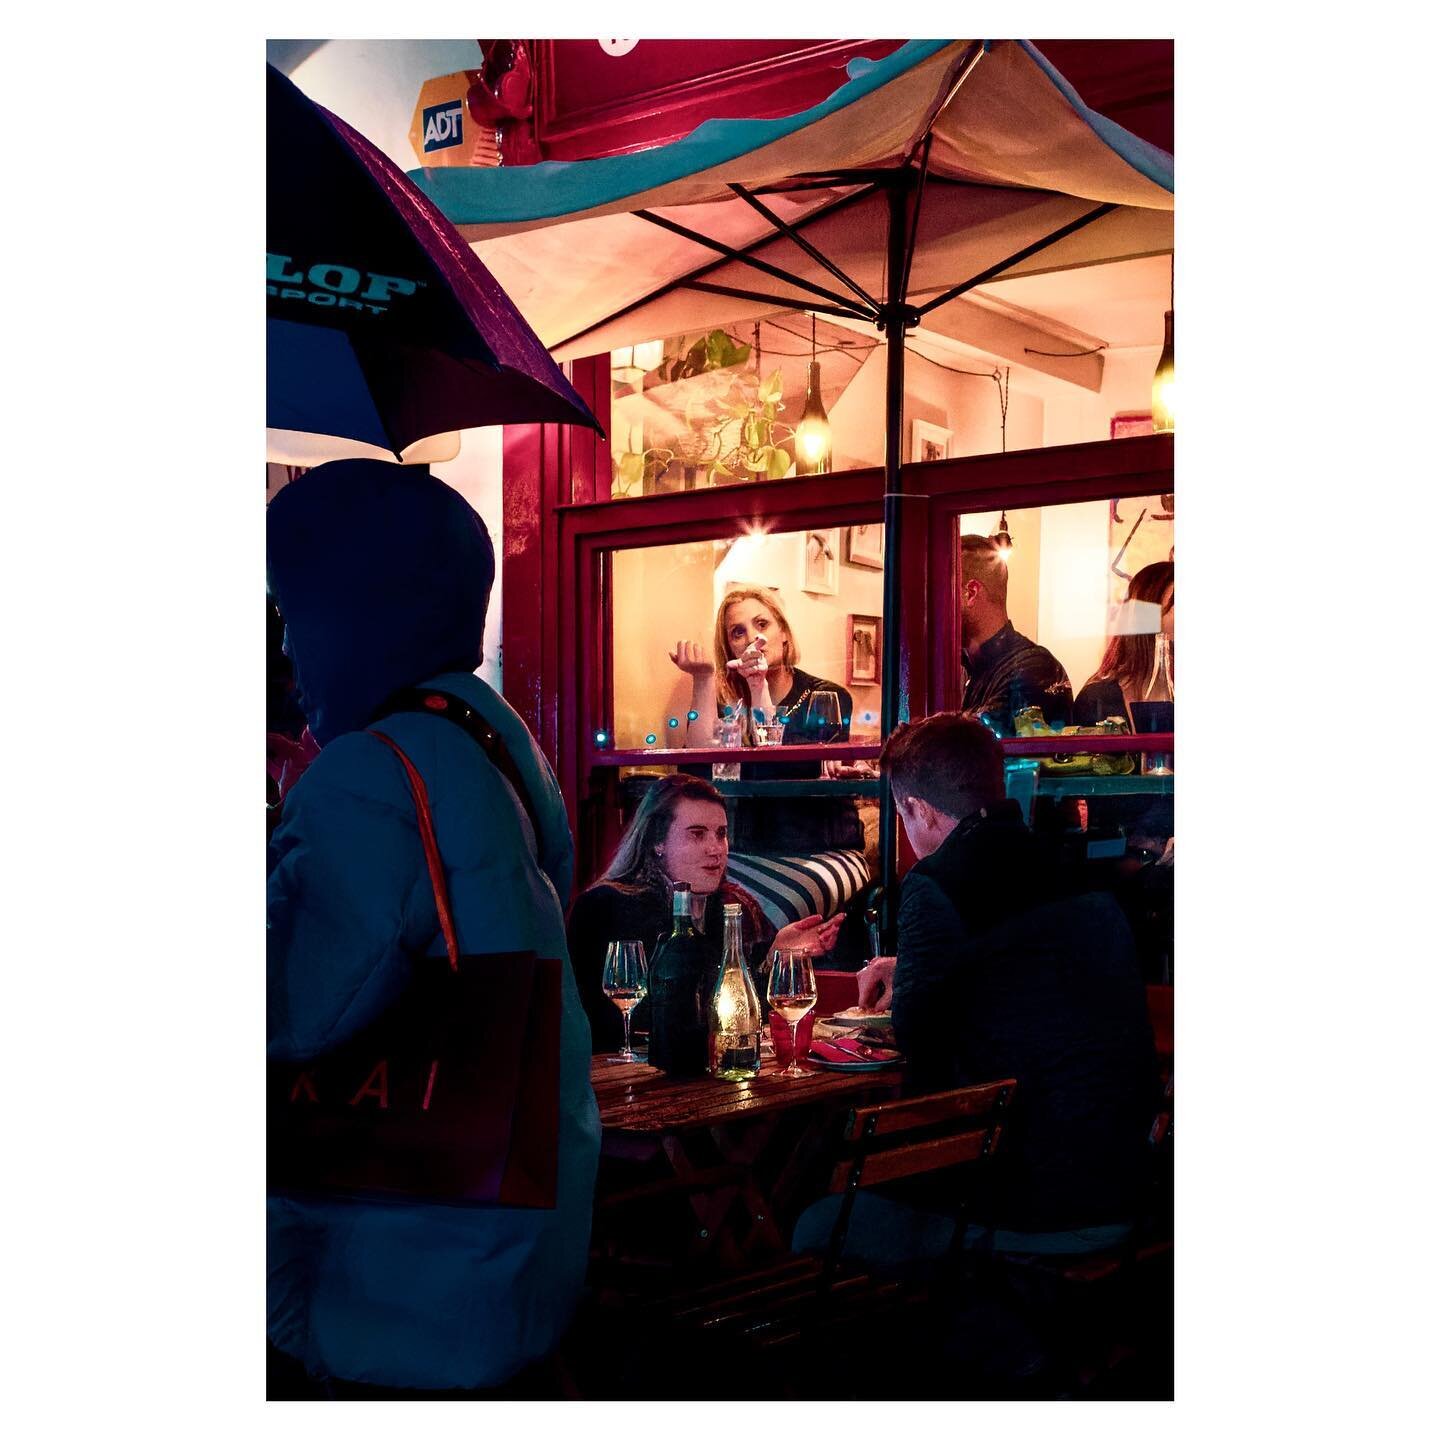 Double Decker Dining.
Covent Garden, London. 2023.
.
.
.
#fromstreetswithlove #thestreetphotographyhub #streetscene #leicam11 #leica #ezpzlmnstreet  #dpsp_street #challengerstreets #shared_streets #_soulsofthestreet #everybodystreet #streetizm #bcnco